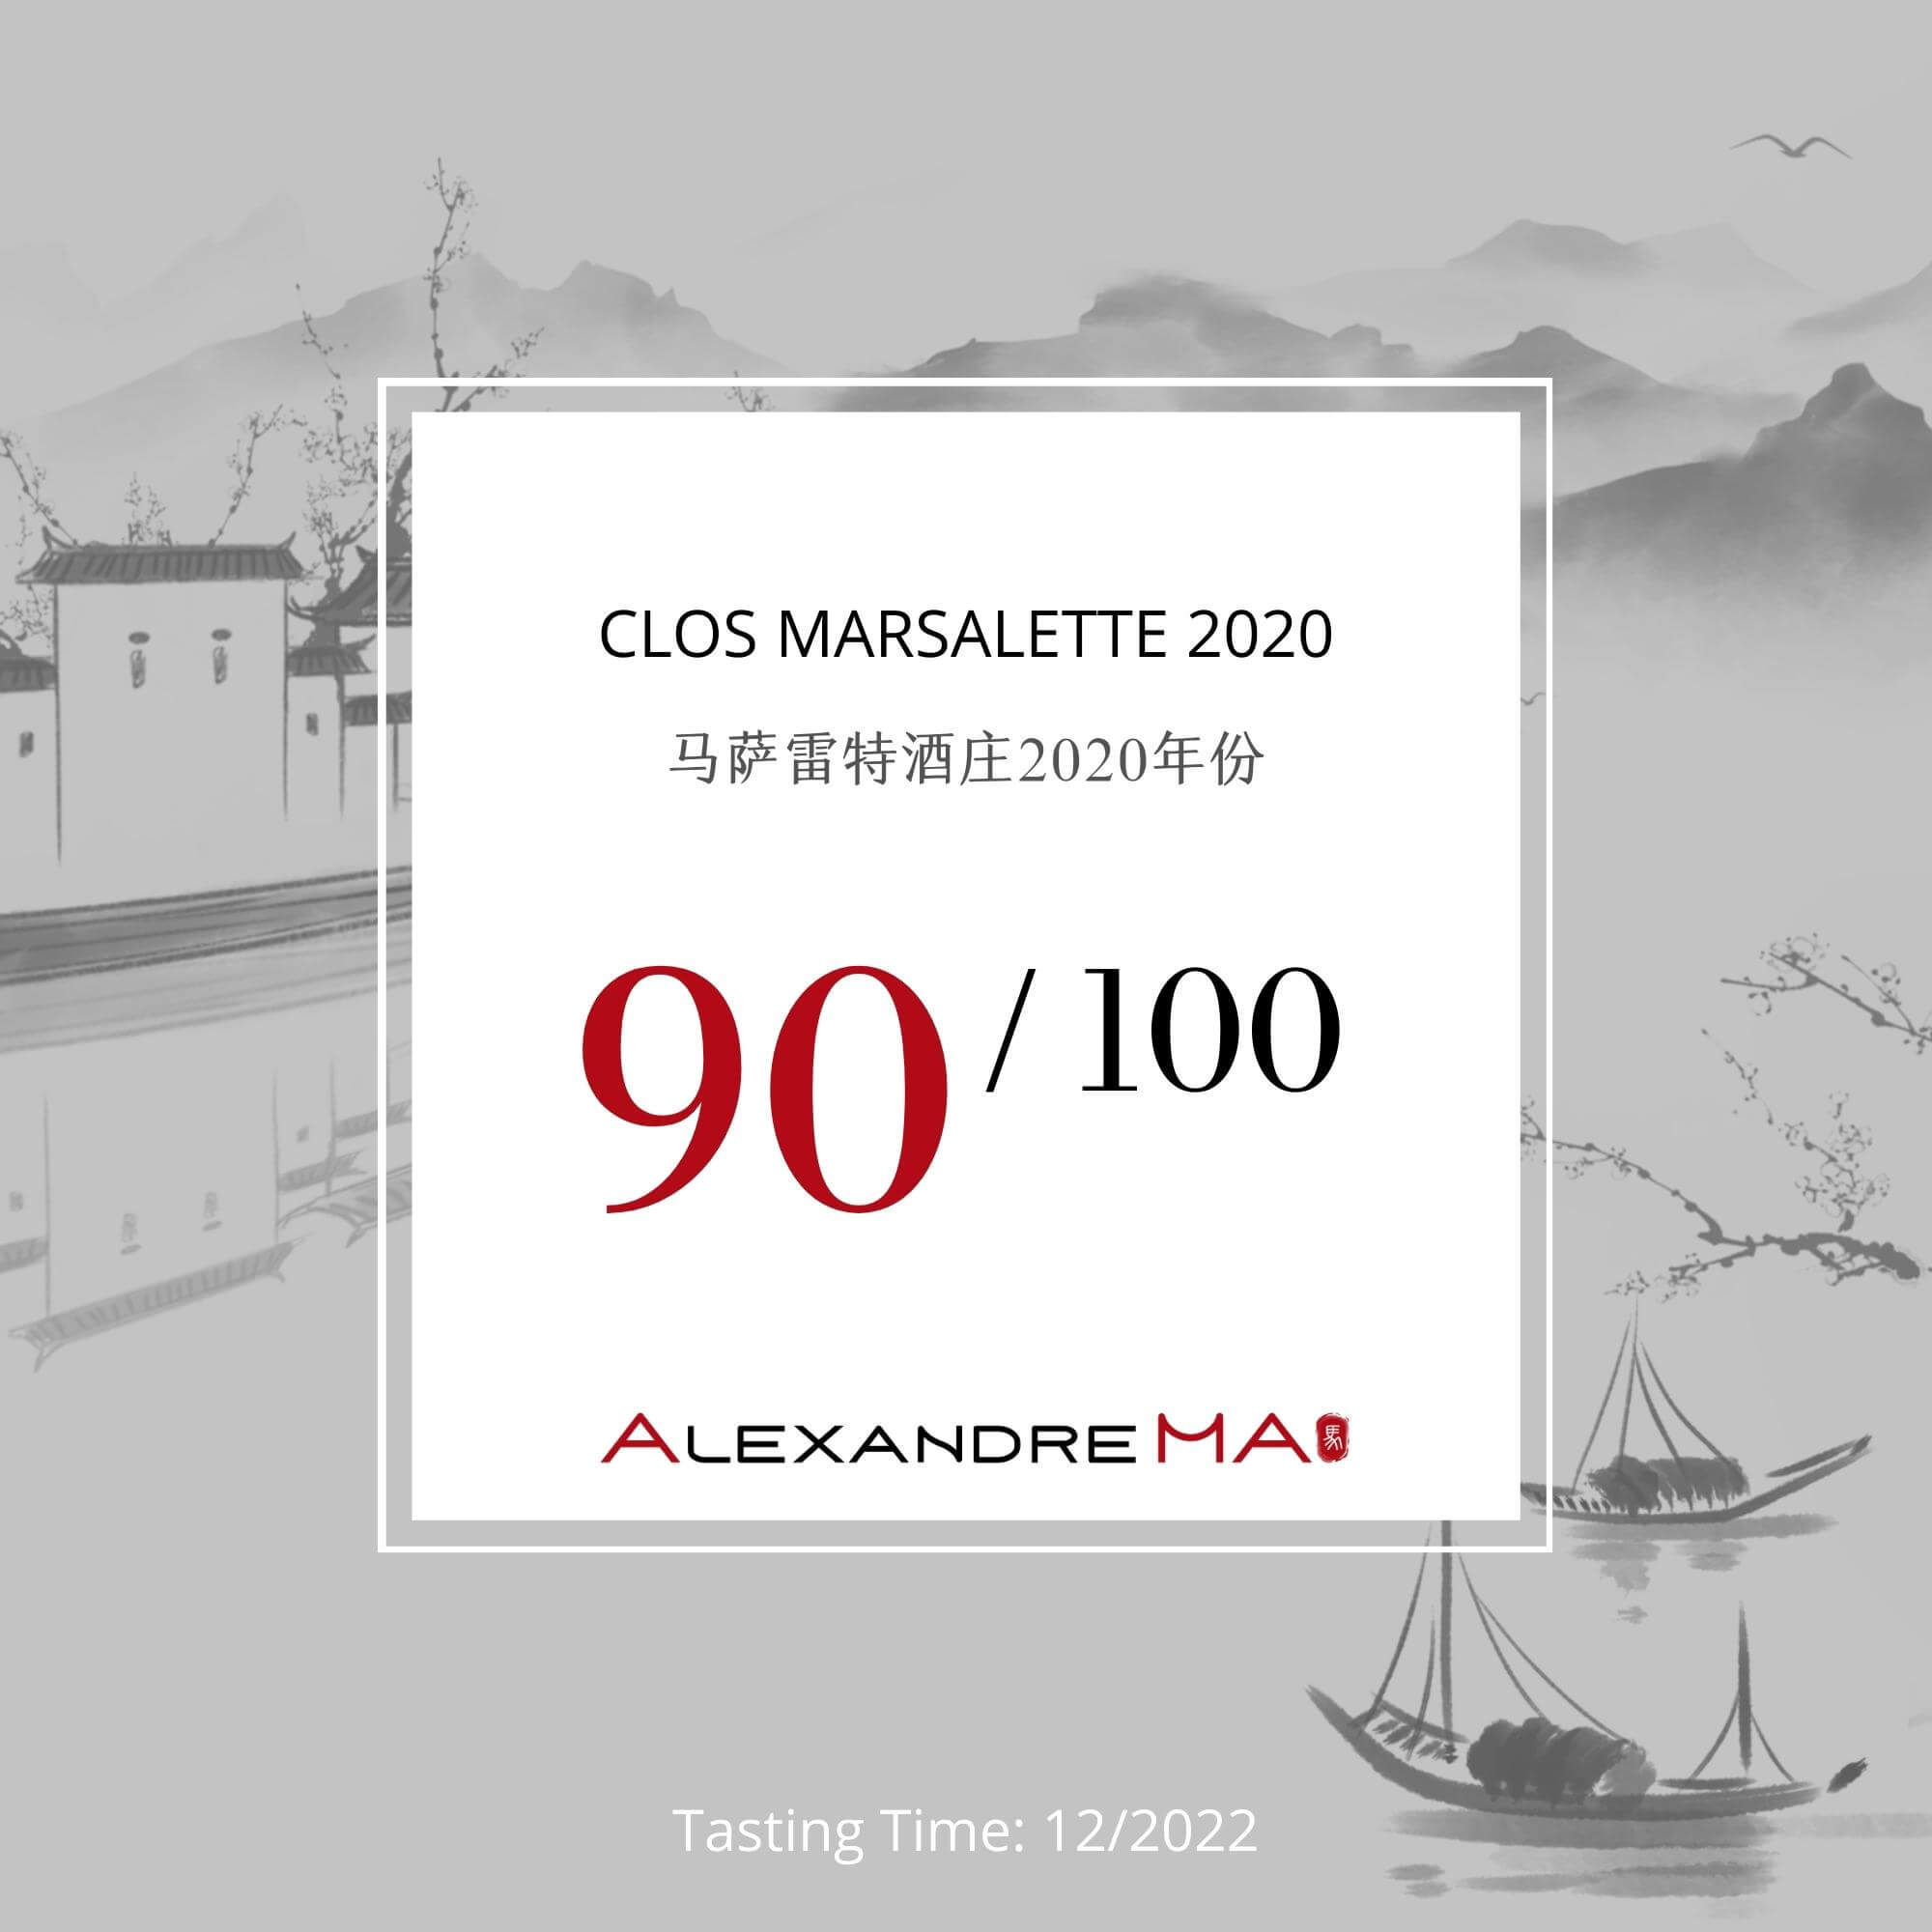 Clos Marsalette 2020 马萨雷特酒庄 - Alexandre Ma